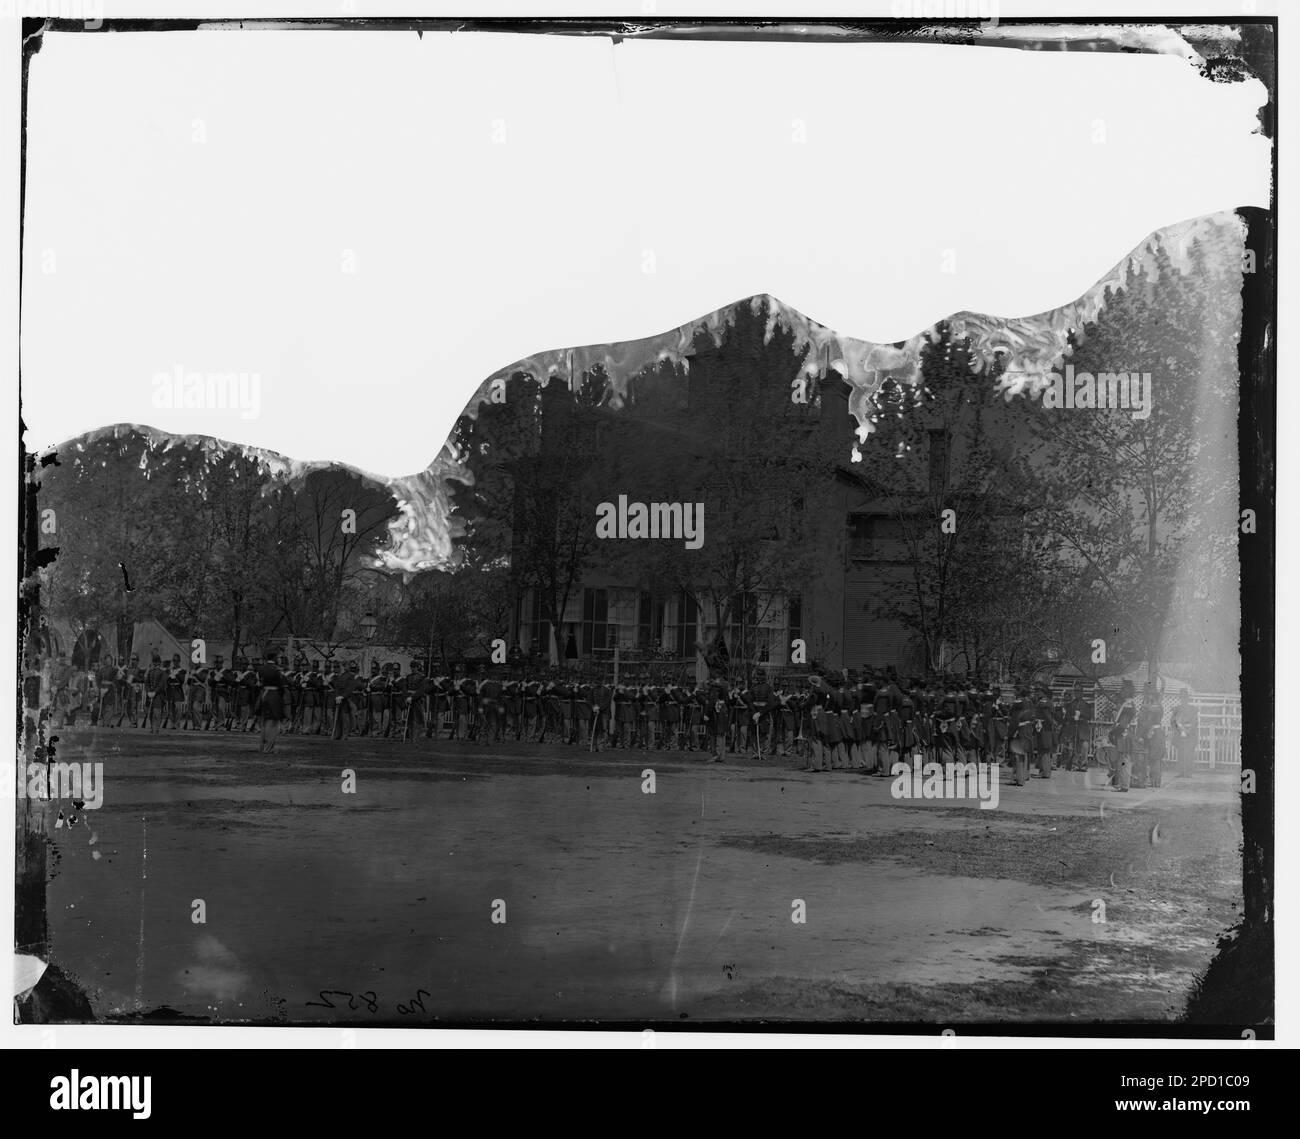 Washington, District of Columbia. Battalion of Marine Corps at Navy Yard. Civil war photographs, 1861-1865 . United States, History, Civil War, 1861-1865. Stock Photo